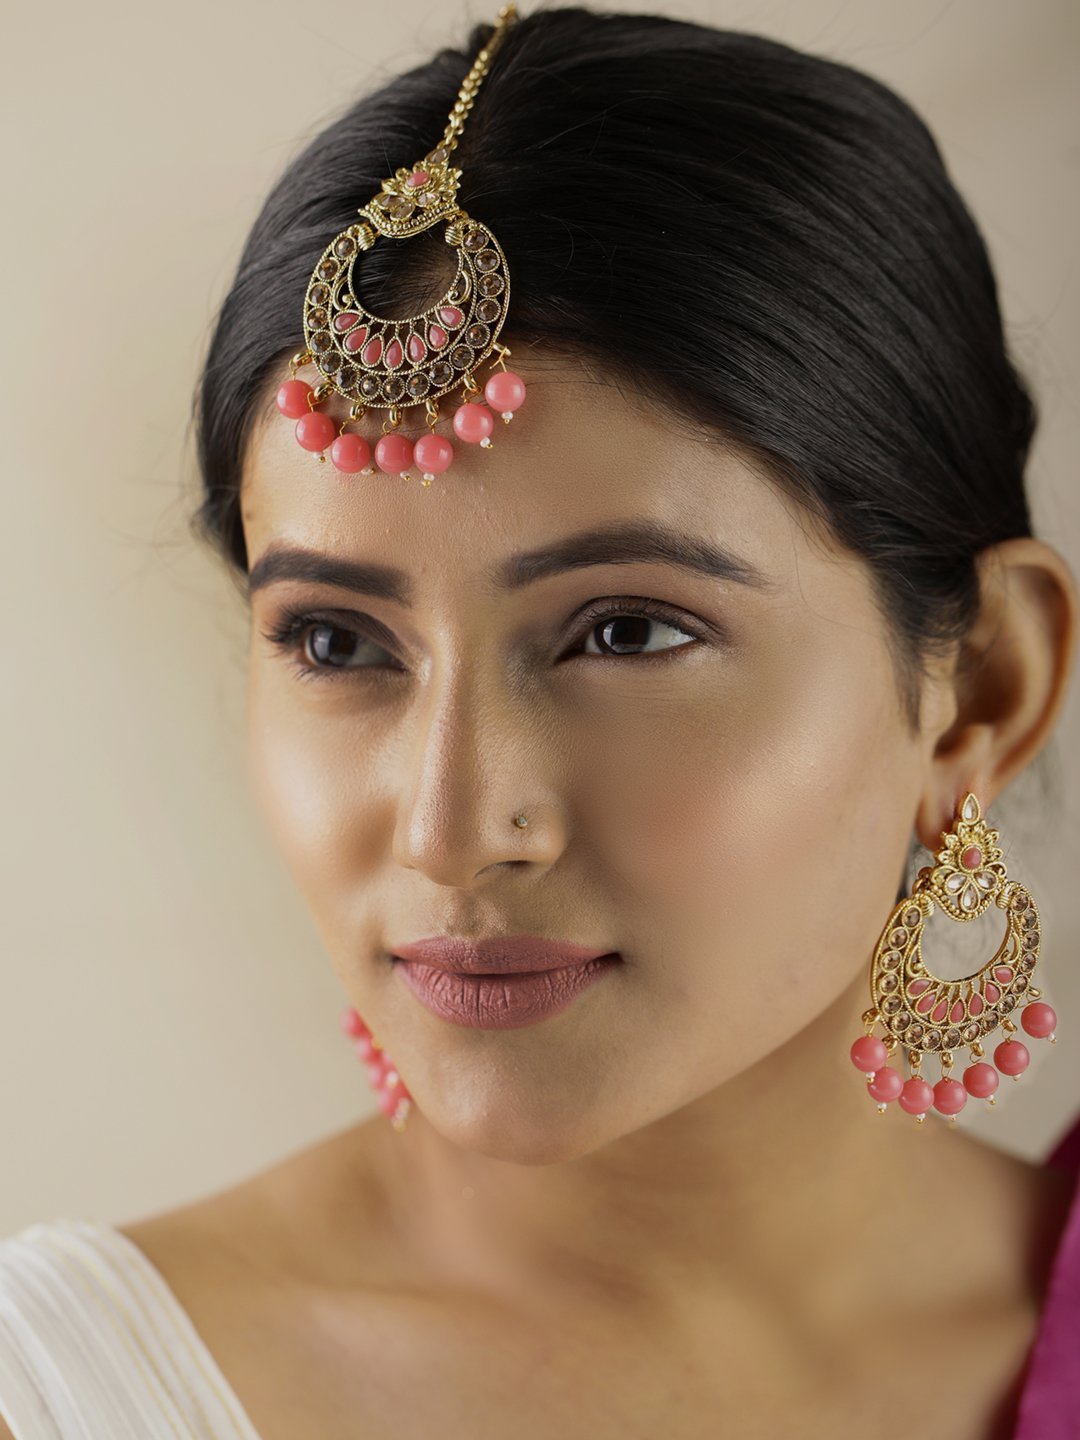 Women's Kundan Pink Stone MaangTikka Earring Set - Priyaasi